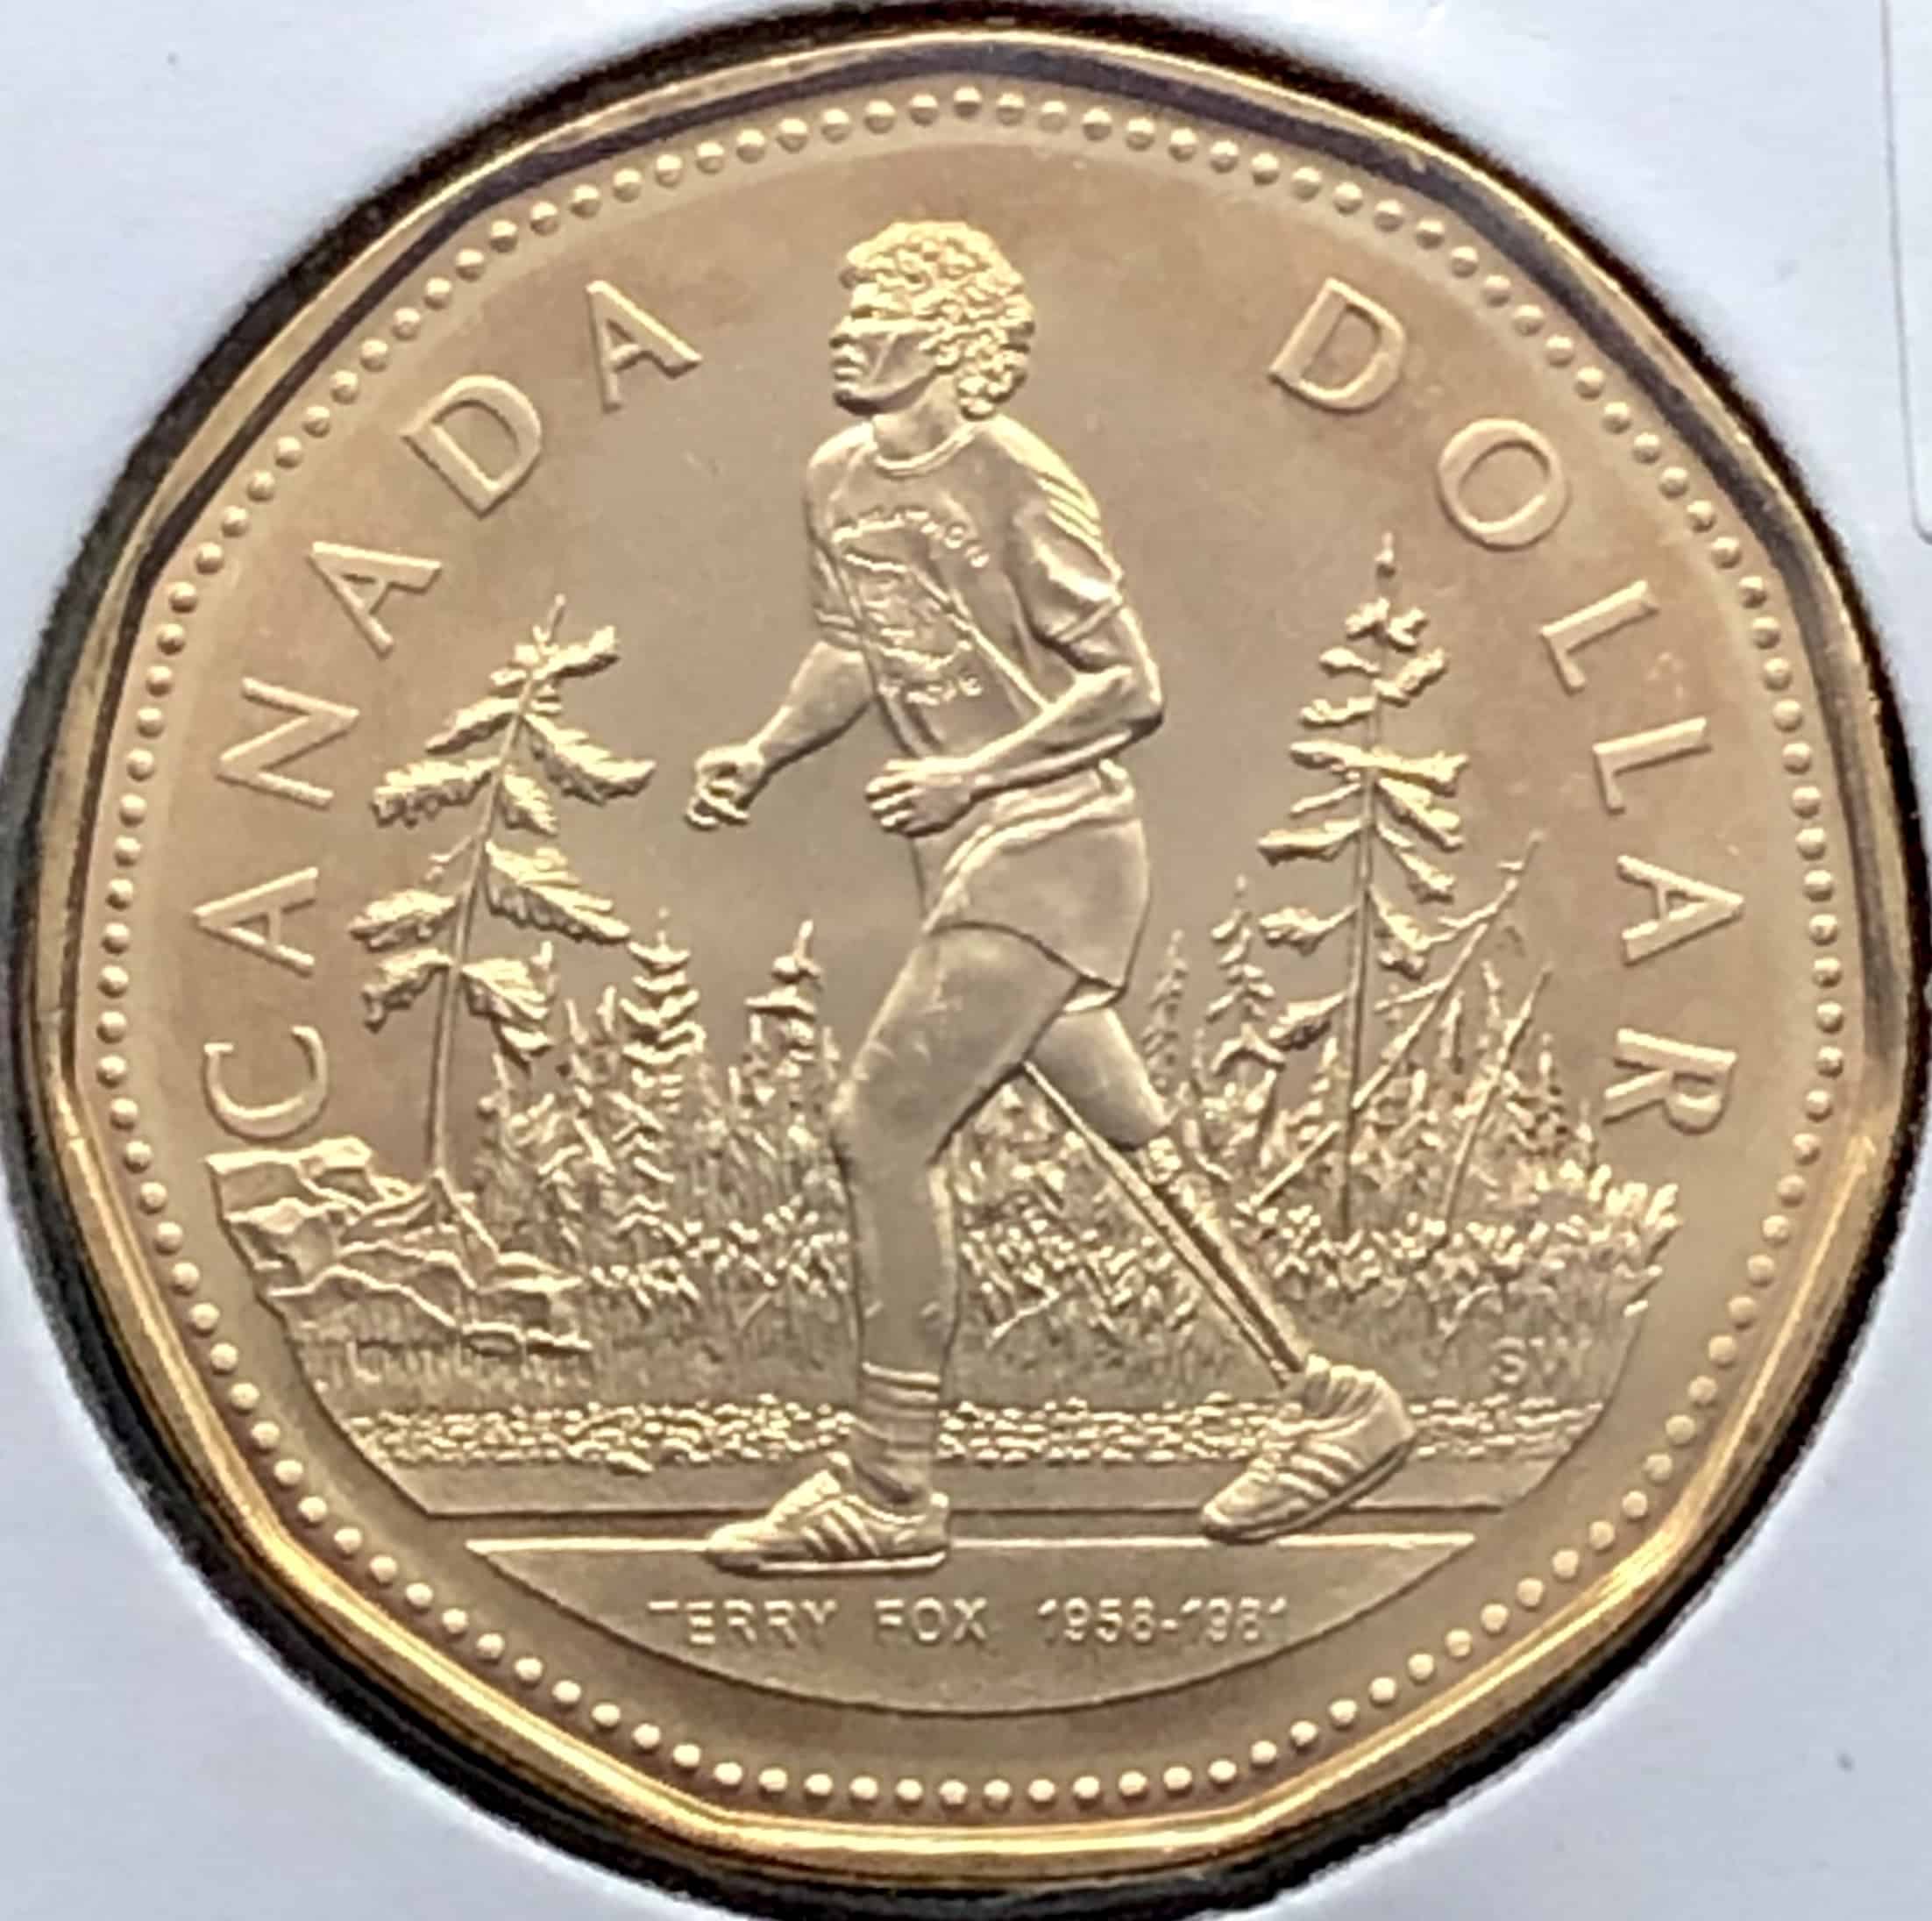 Canada - Dollar 2005 Terry Fox - B.UNC